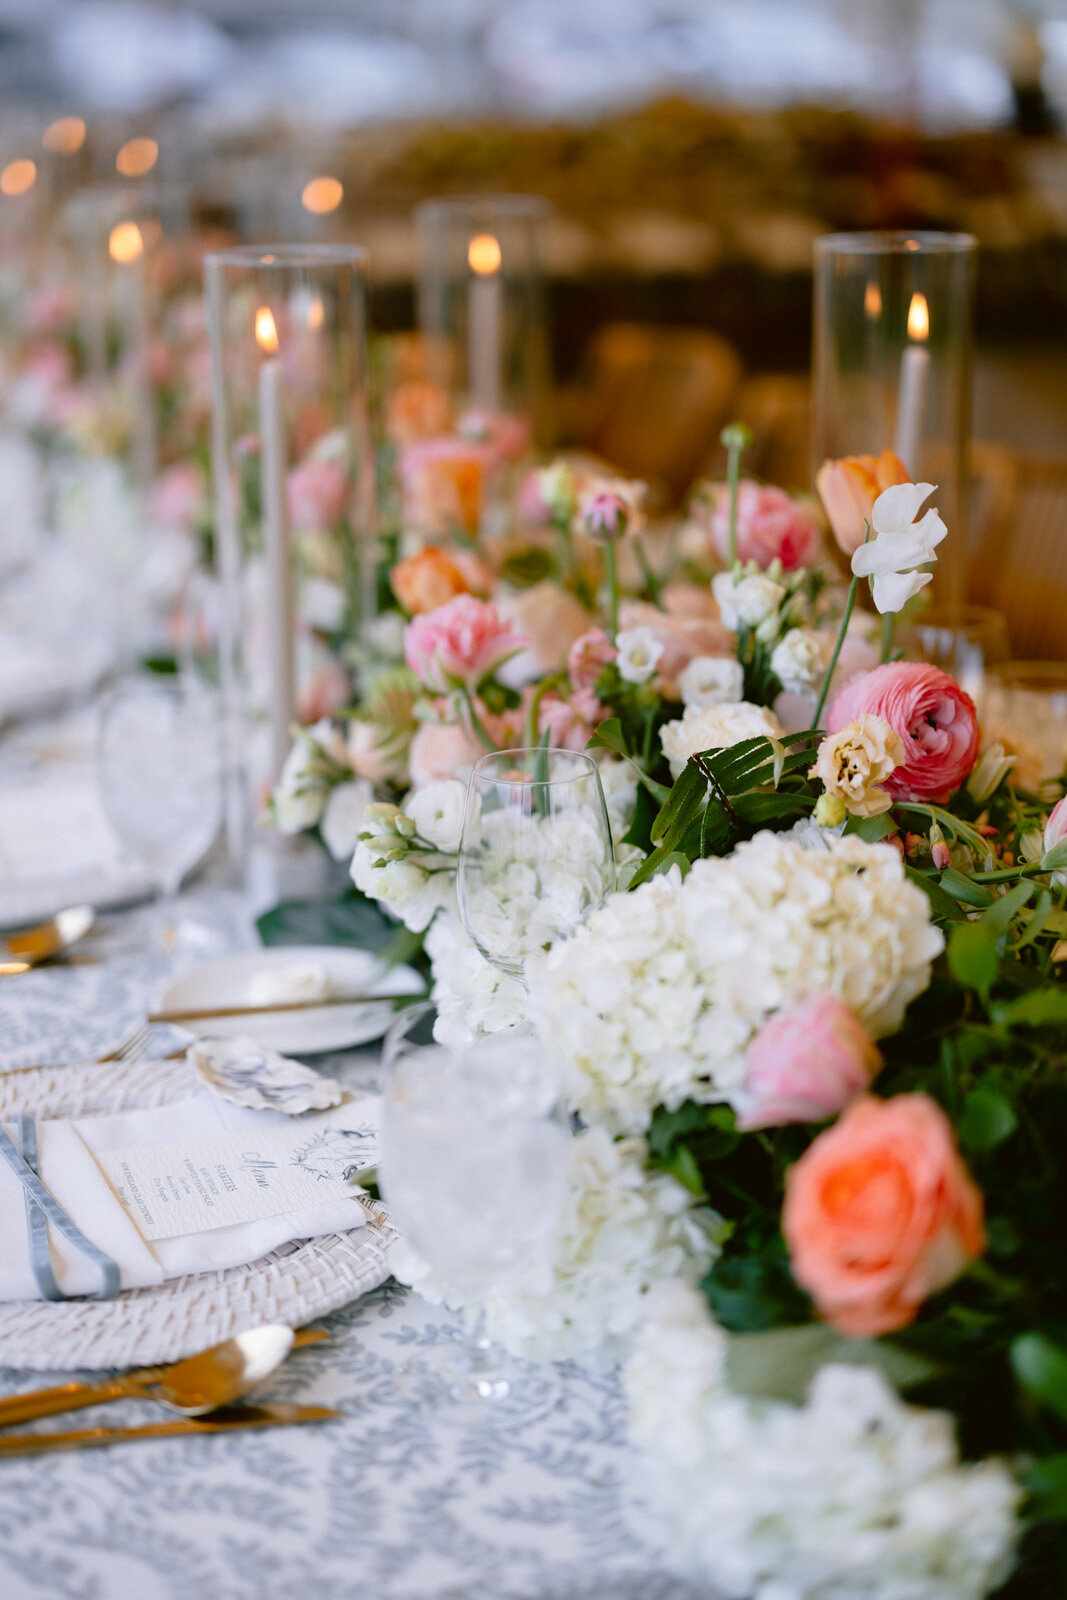 Kate-Murtaugh-Events-Weekapaug-Inn-tented-wedding-custom-calligraphy-menu-place-setting-spring-flowers